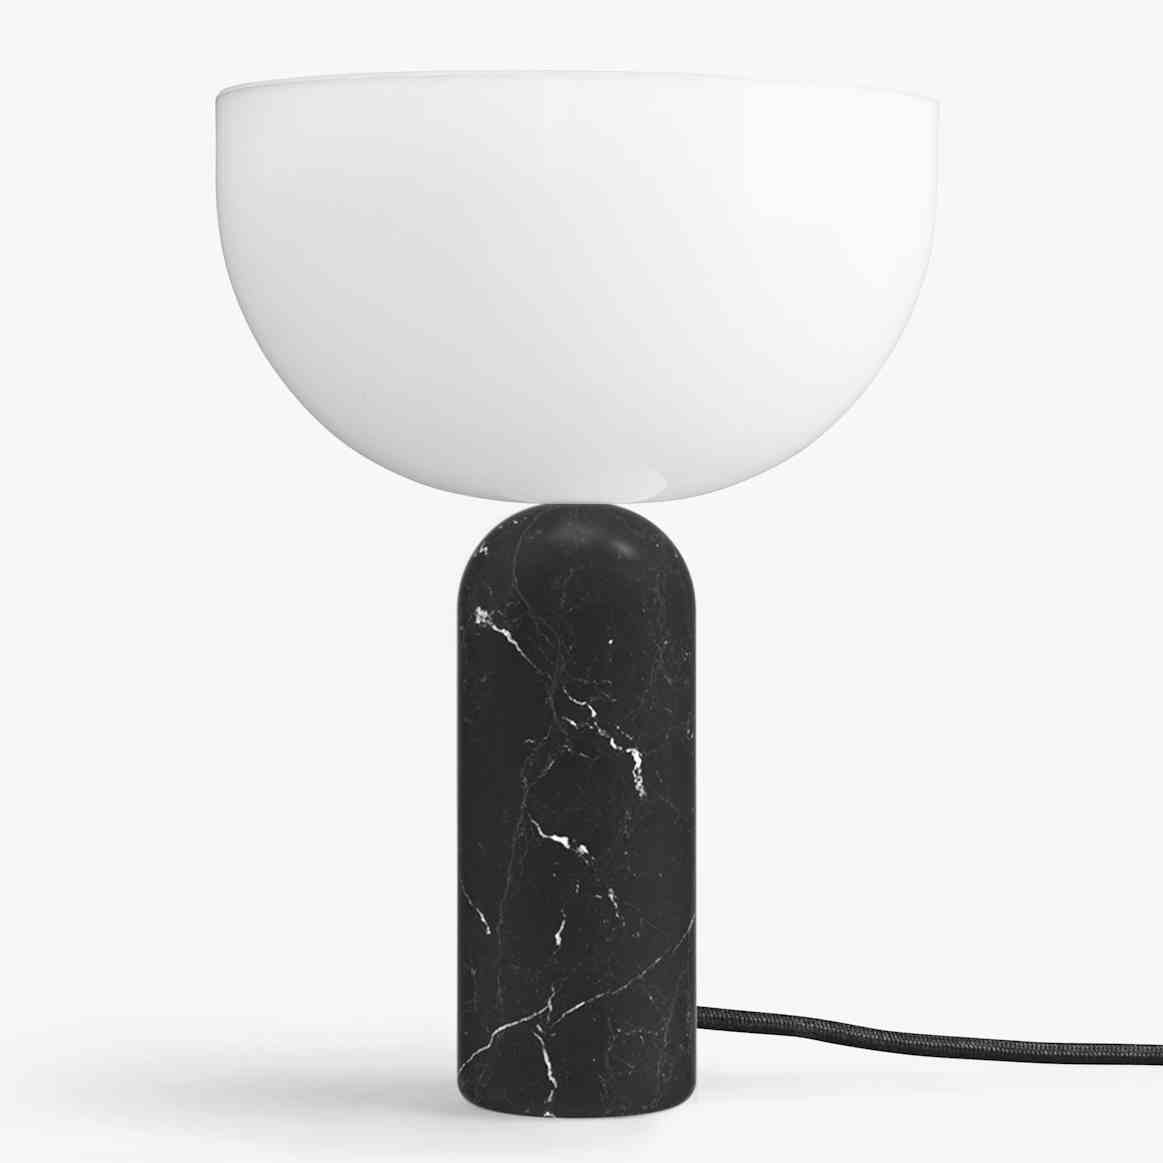 New works furniture kizu table lamp small black grey haute living